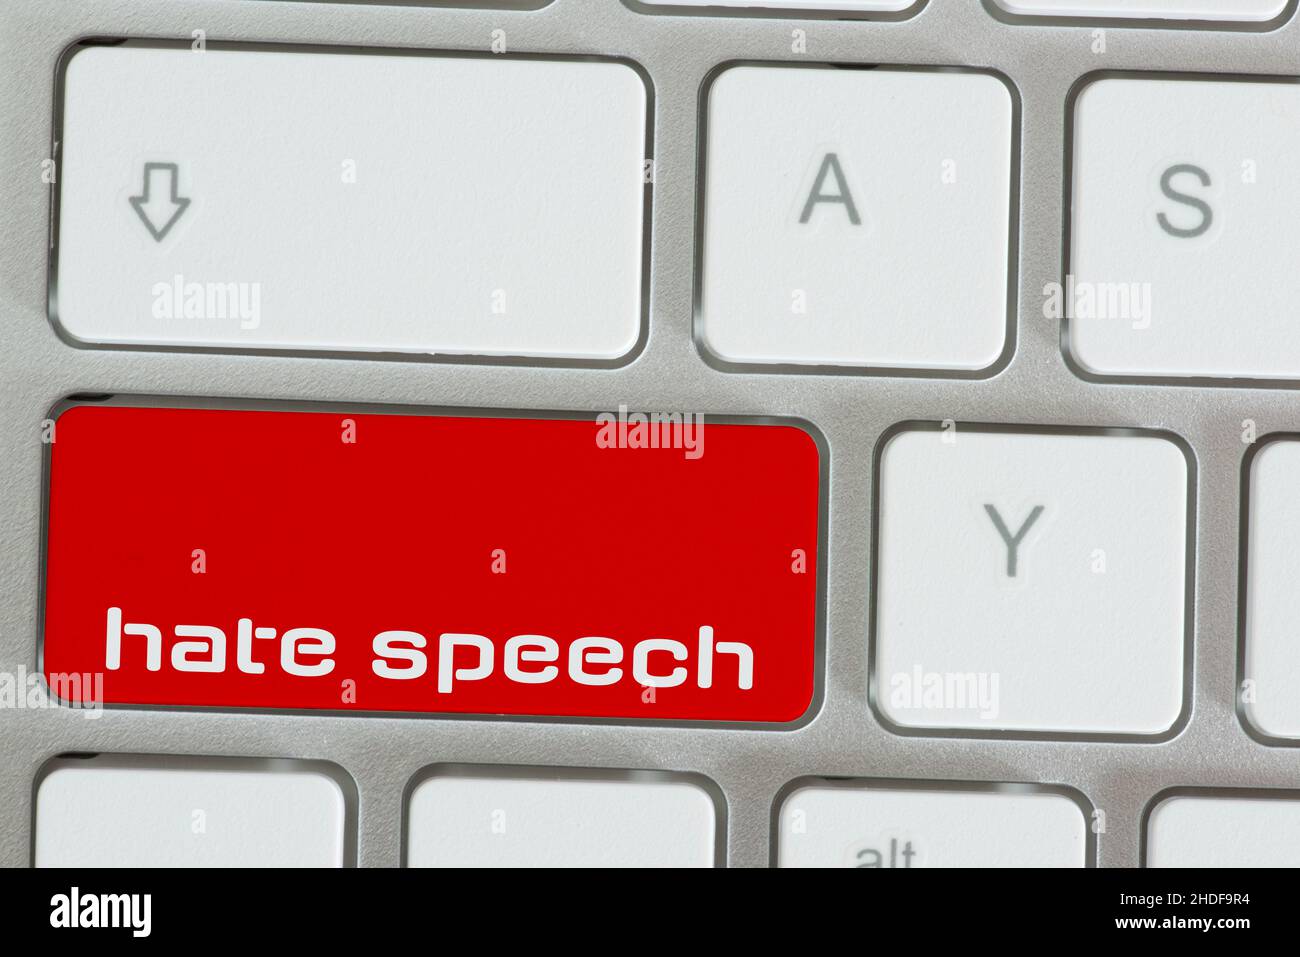 hate speech Stock Photo